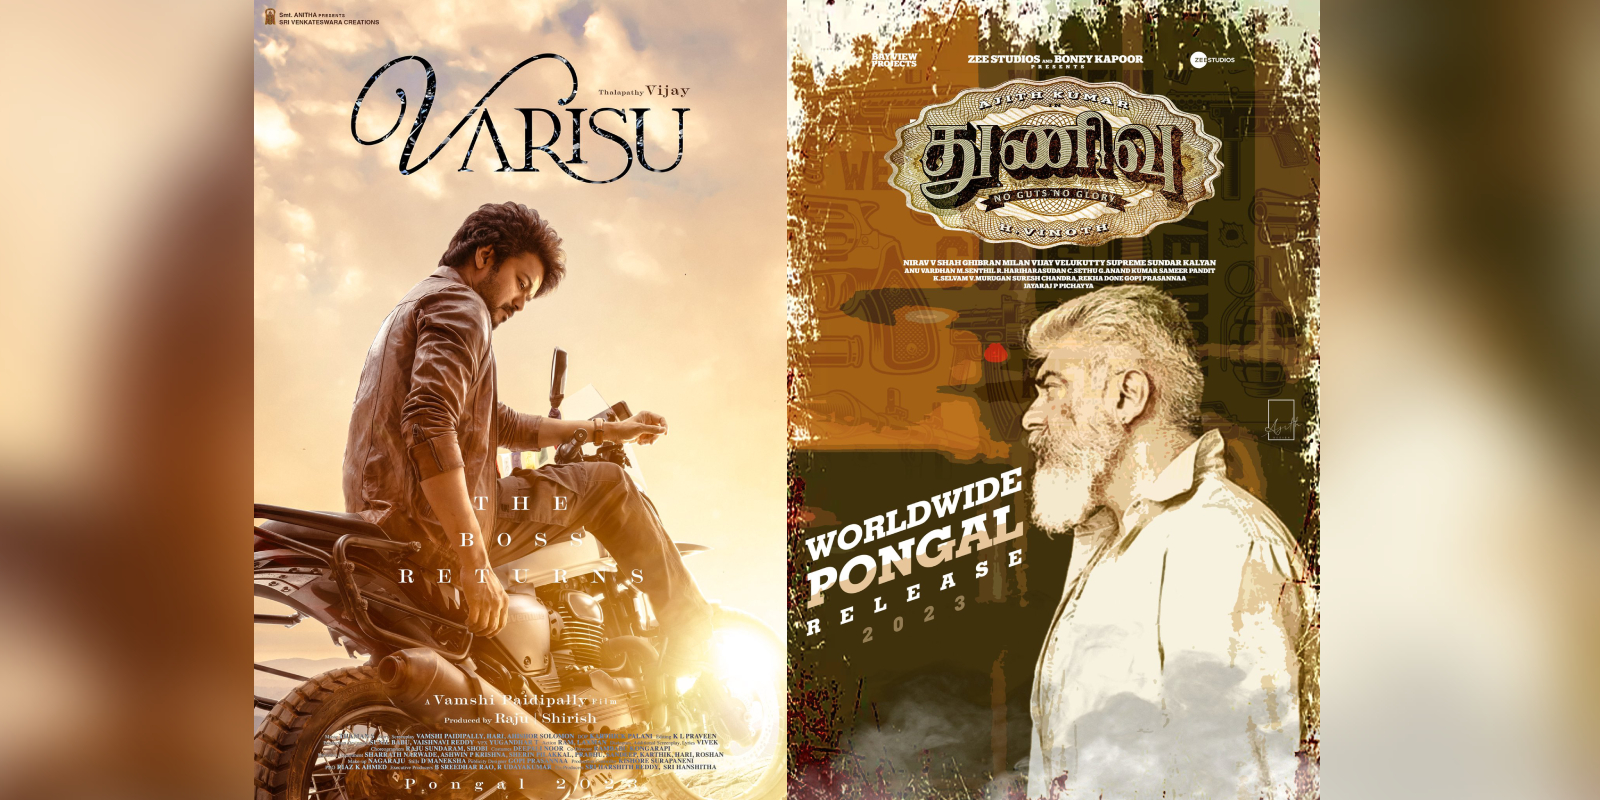 Big box office clash: Vijay's 'Varisu' vs Ajith Kumar's 'Thunivu